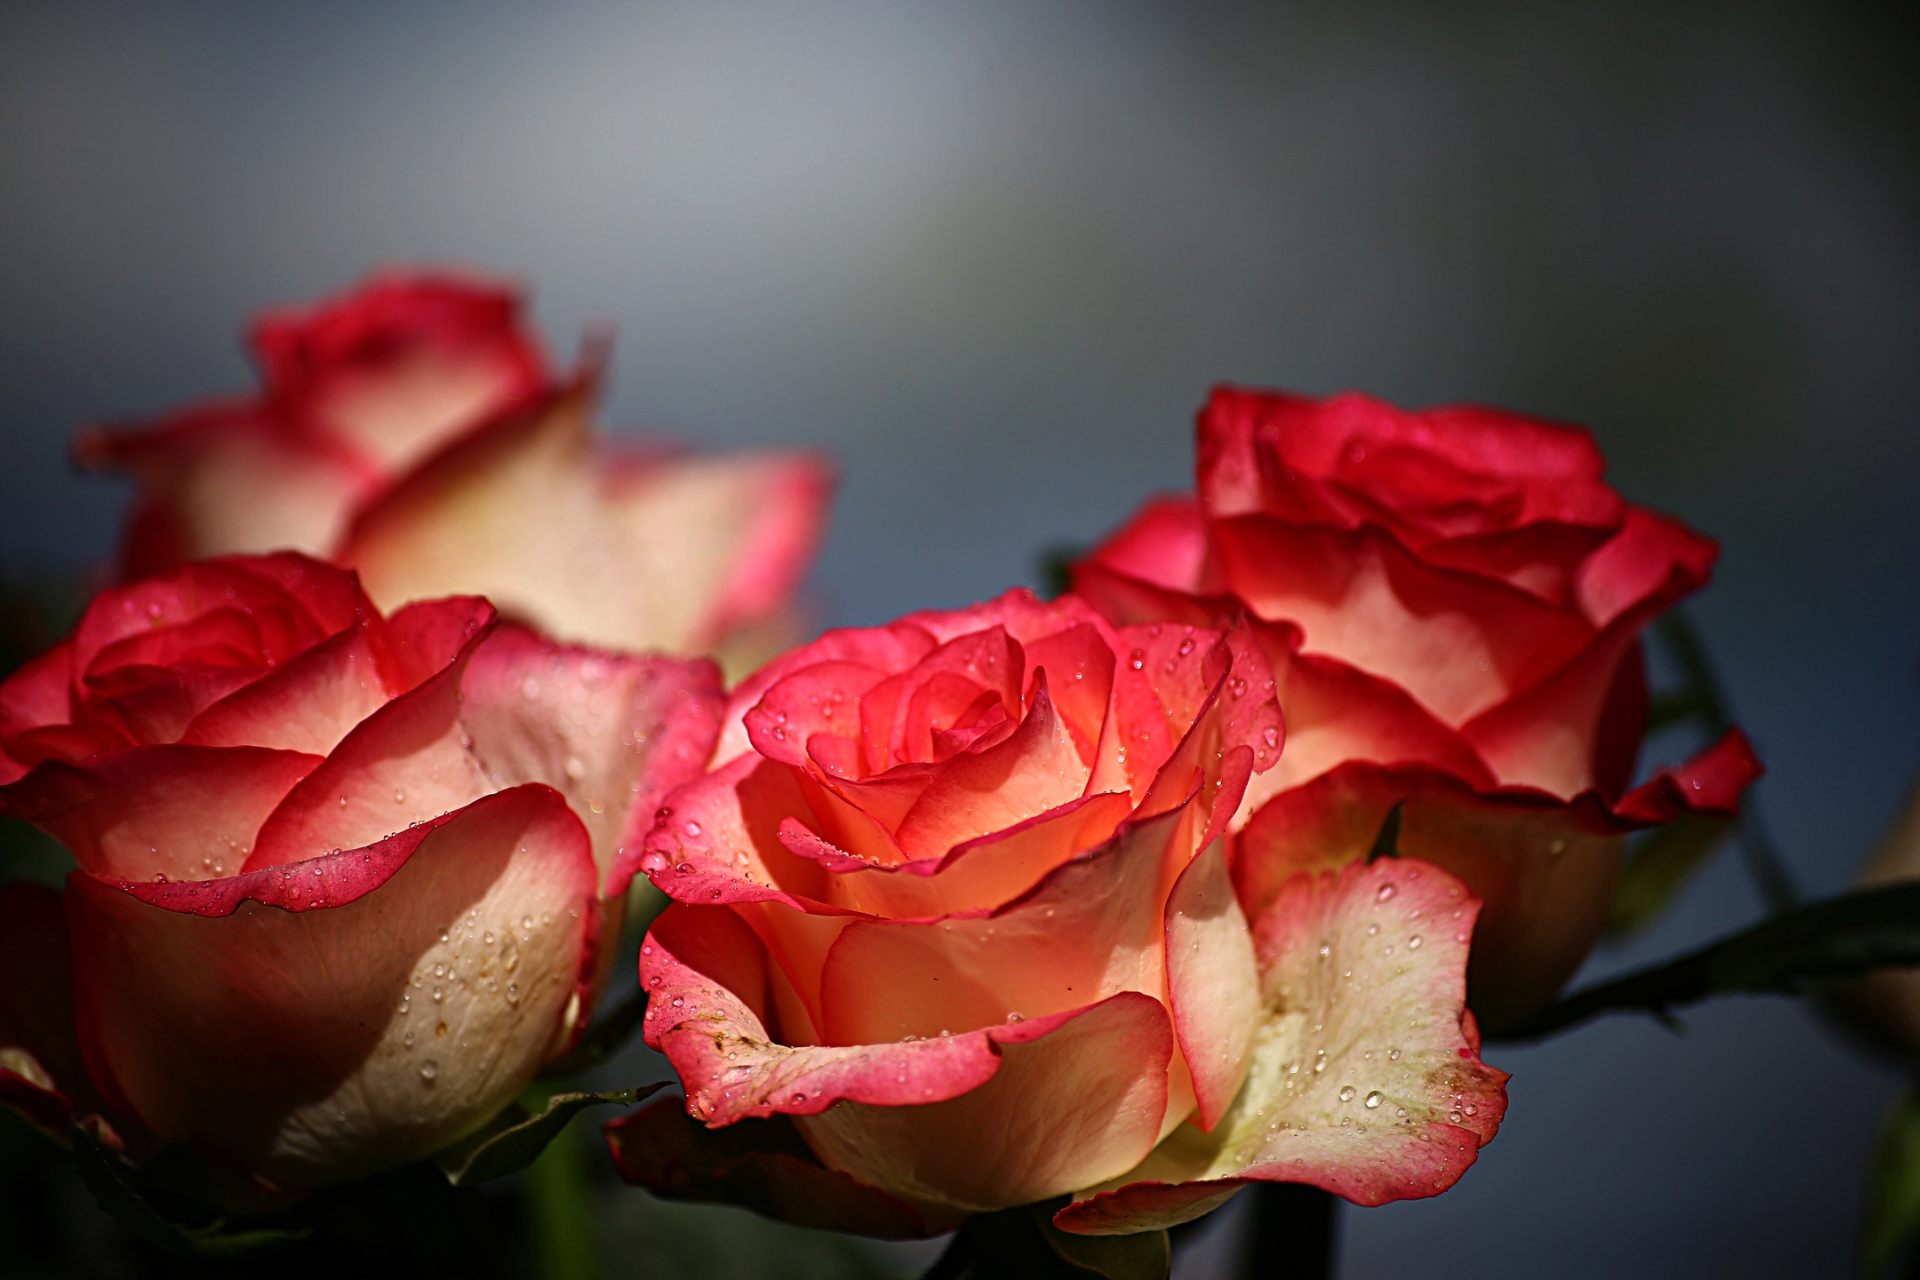 Wishing Good Morning With Pink Rose Flower Wallpaper - Rose Flower Morning - HD Wallpaper 